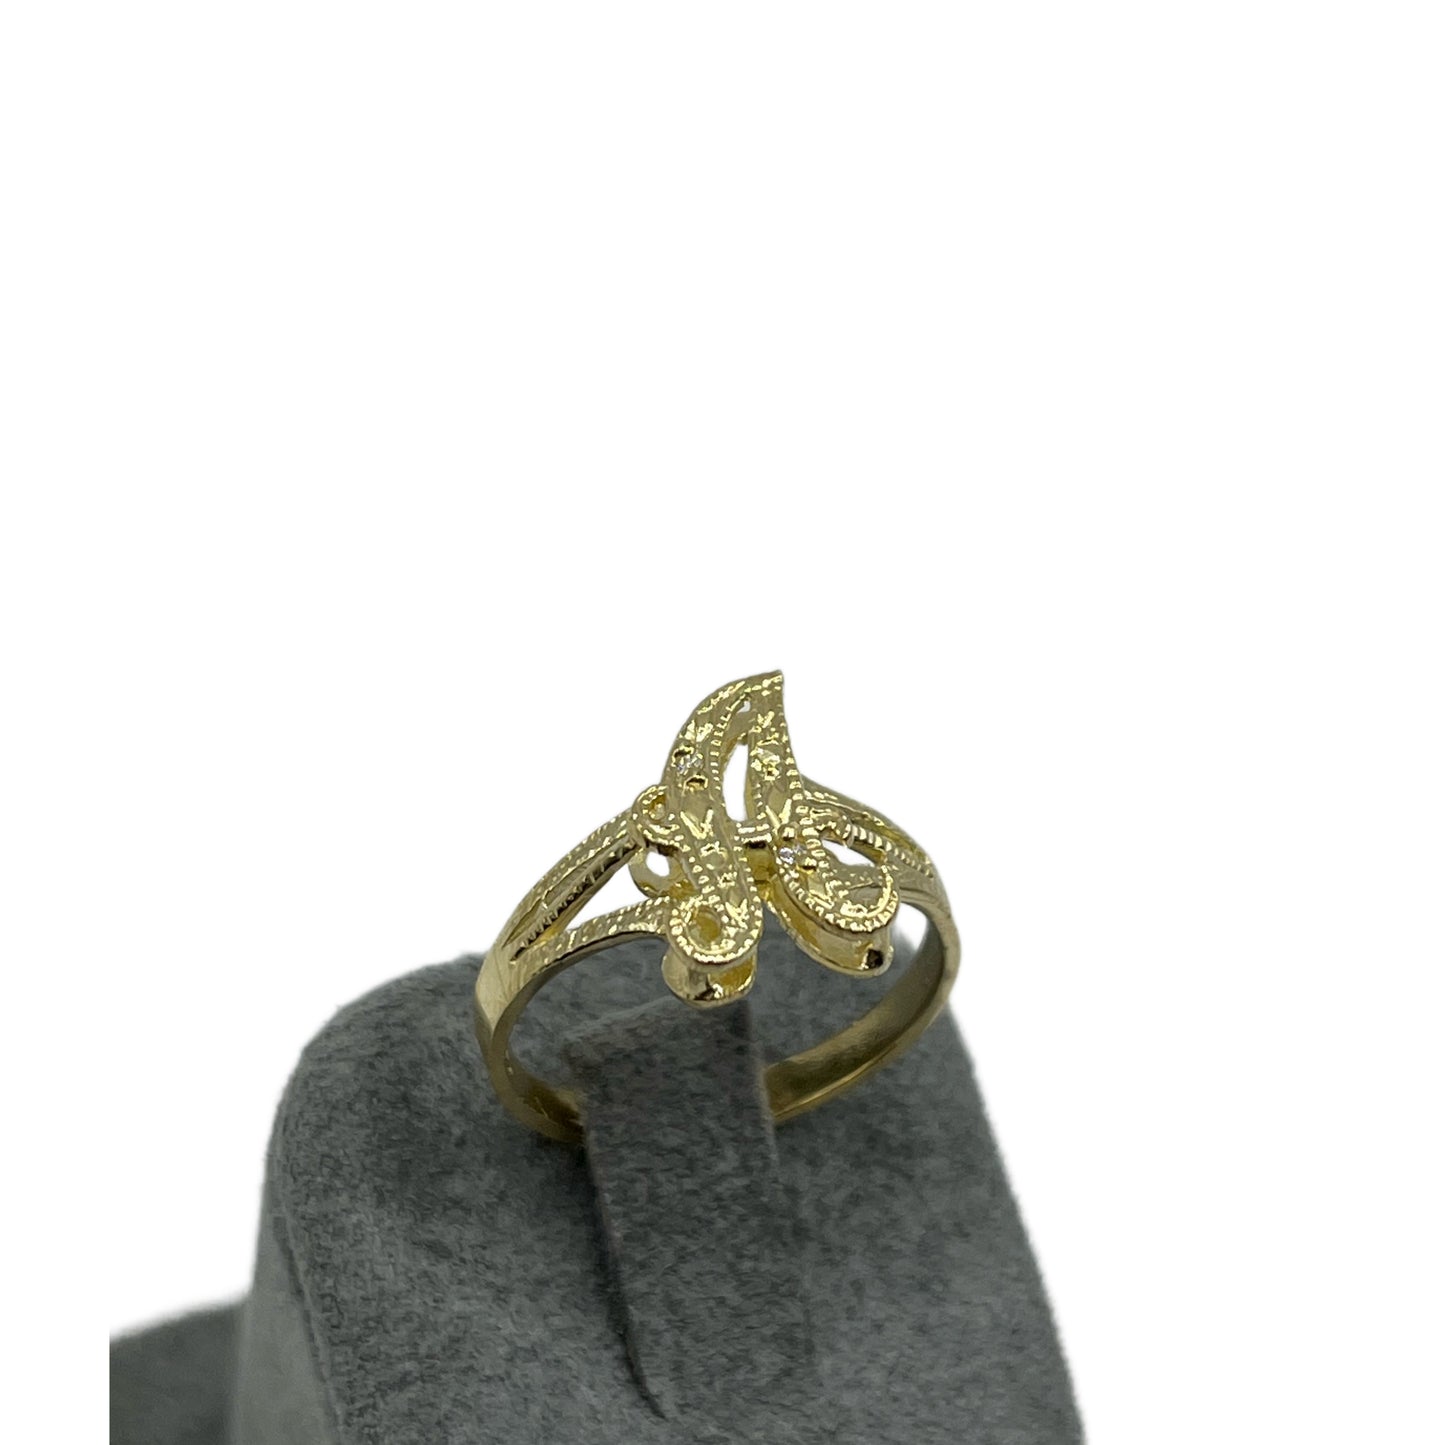 10K Gold 3-D Cursive Initial Ring